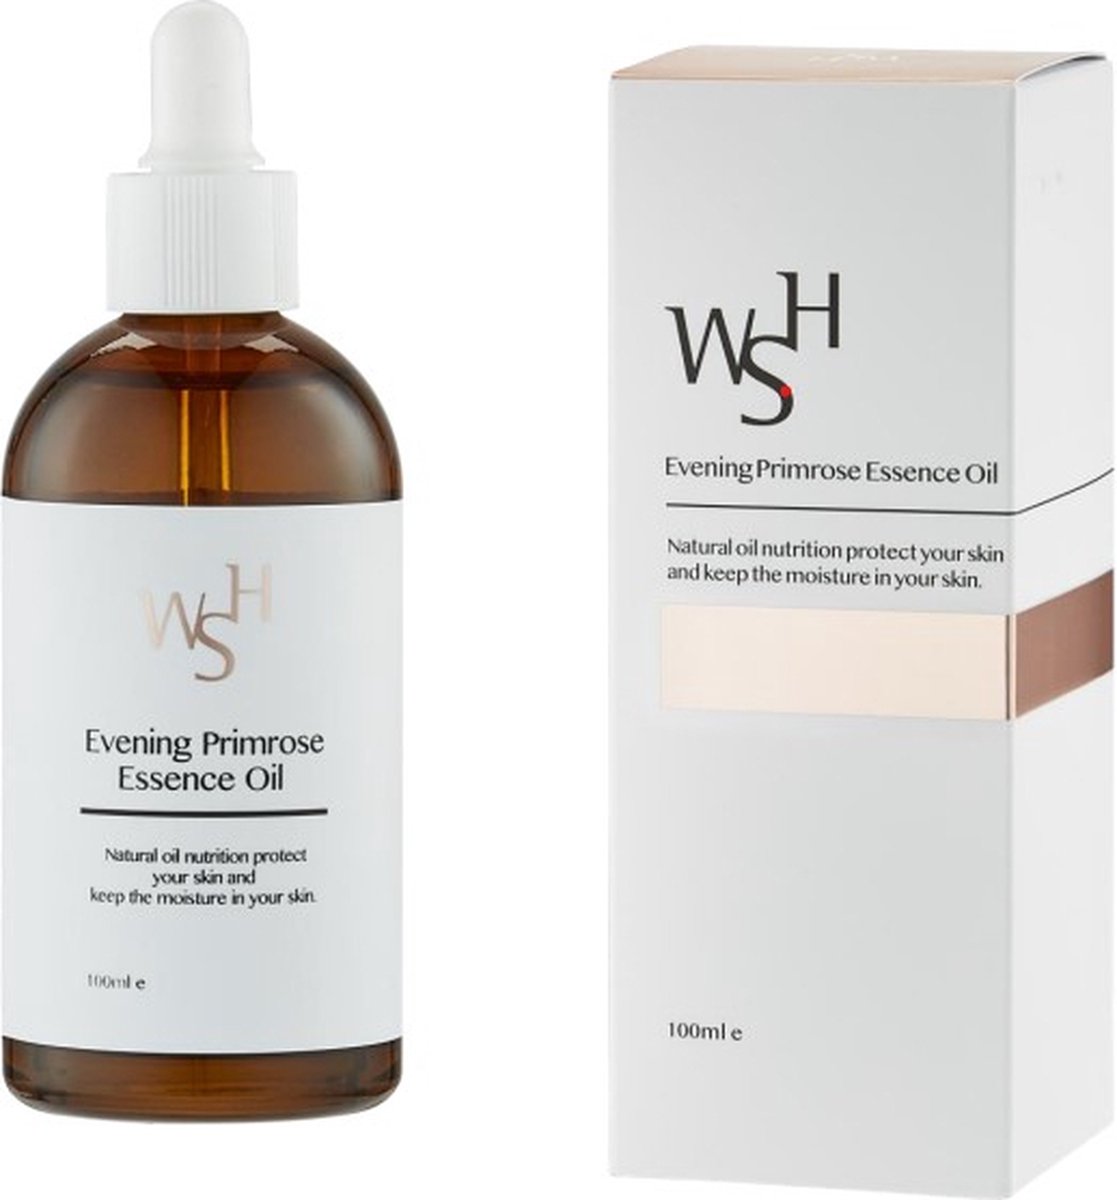 WSH - Evening Primrose Essence Oil - Vegan